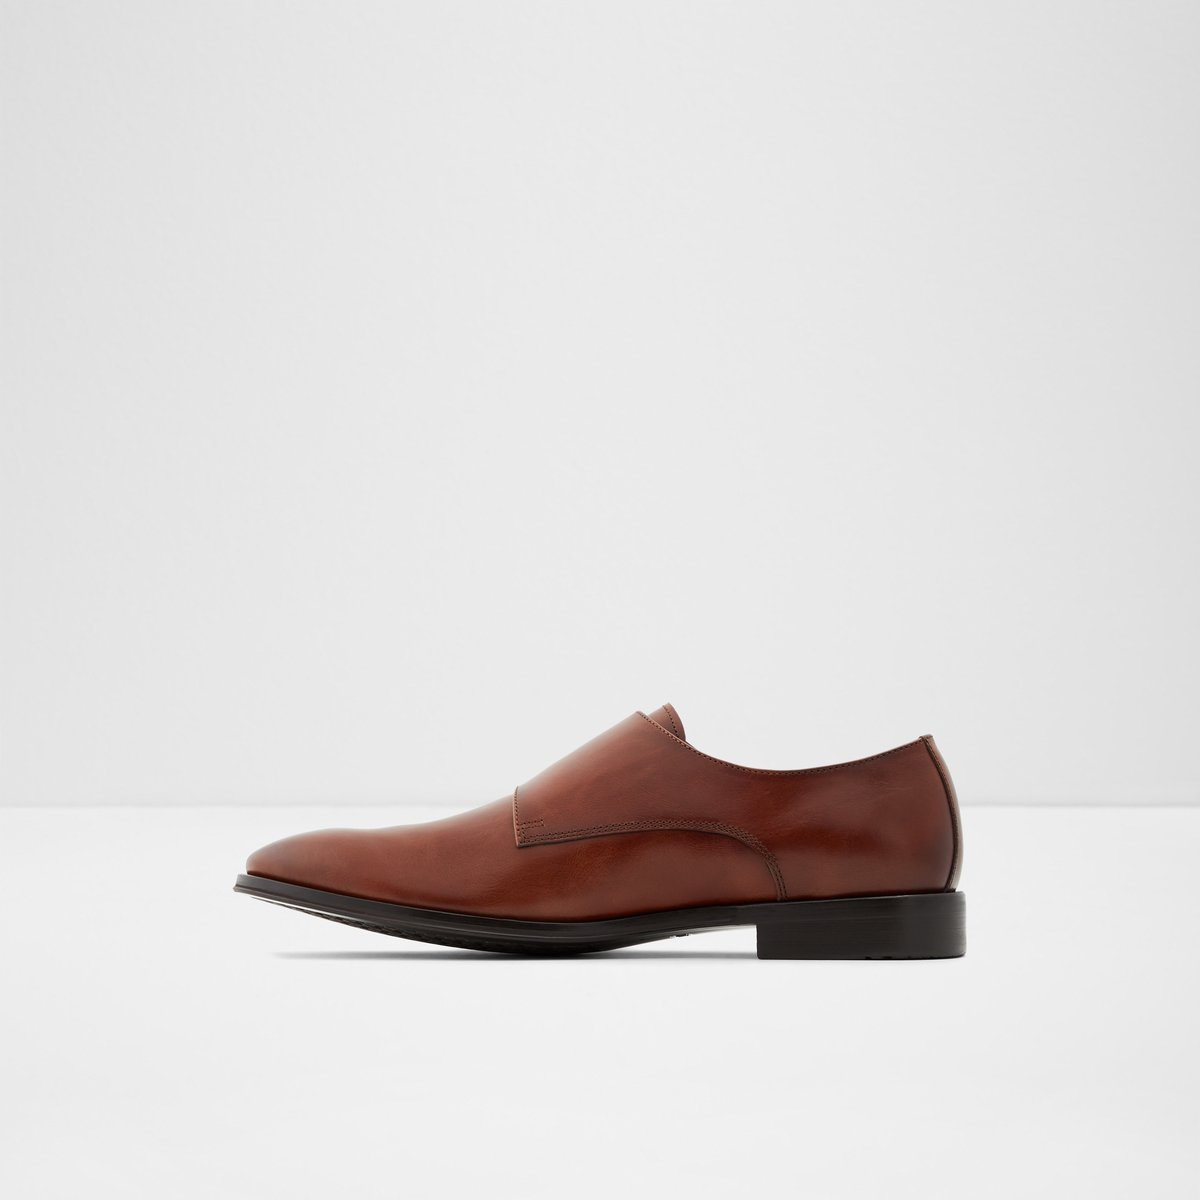 ALDO VERADIEN Men Size 8 & 9 Dress Shoes New In Box. Classic Men’s Loafers